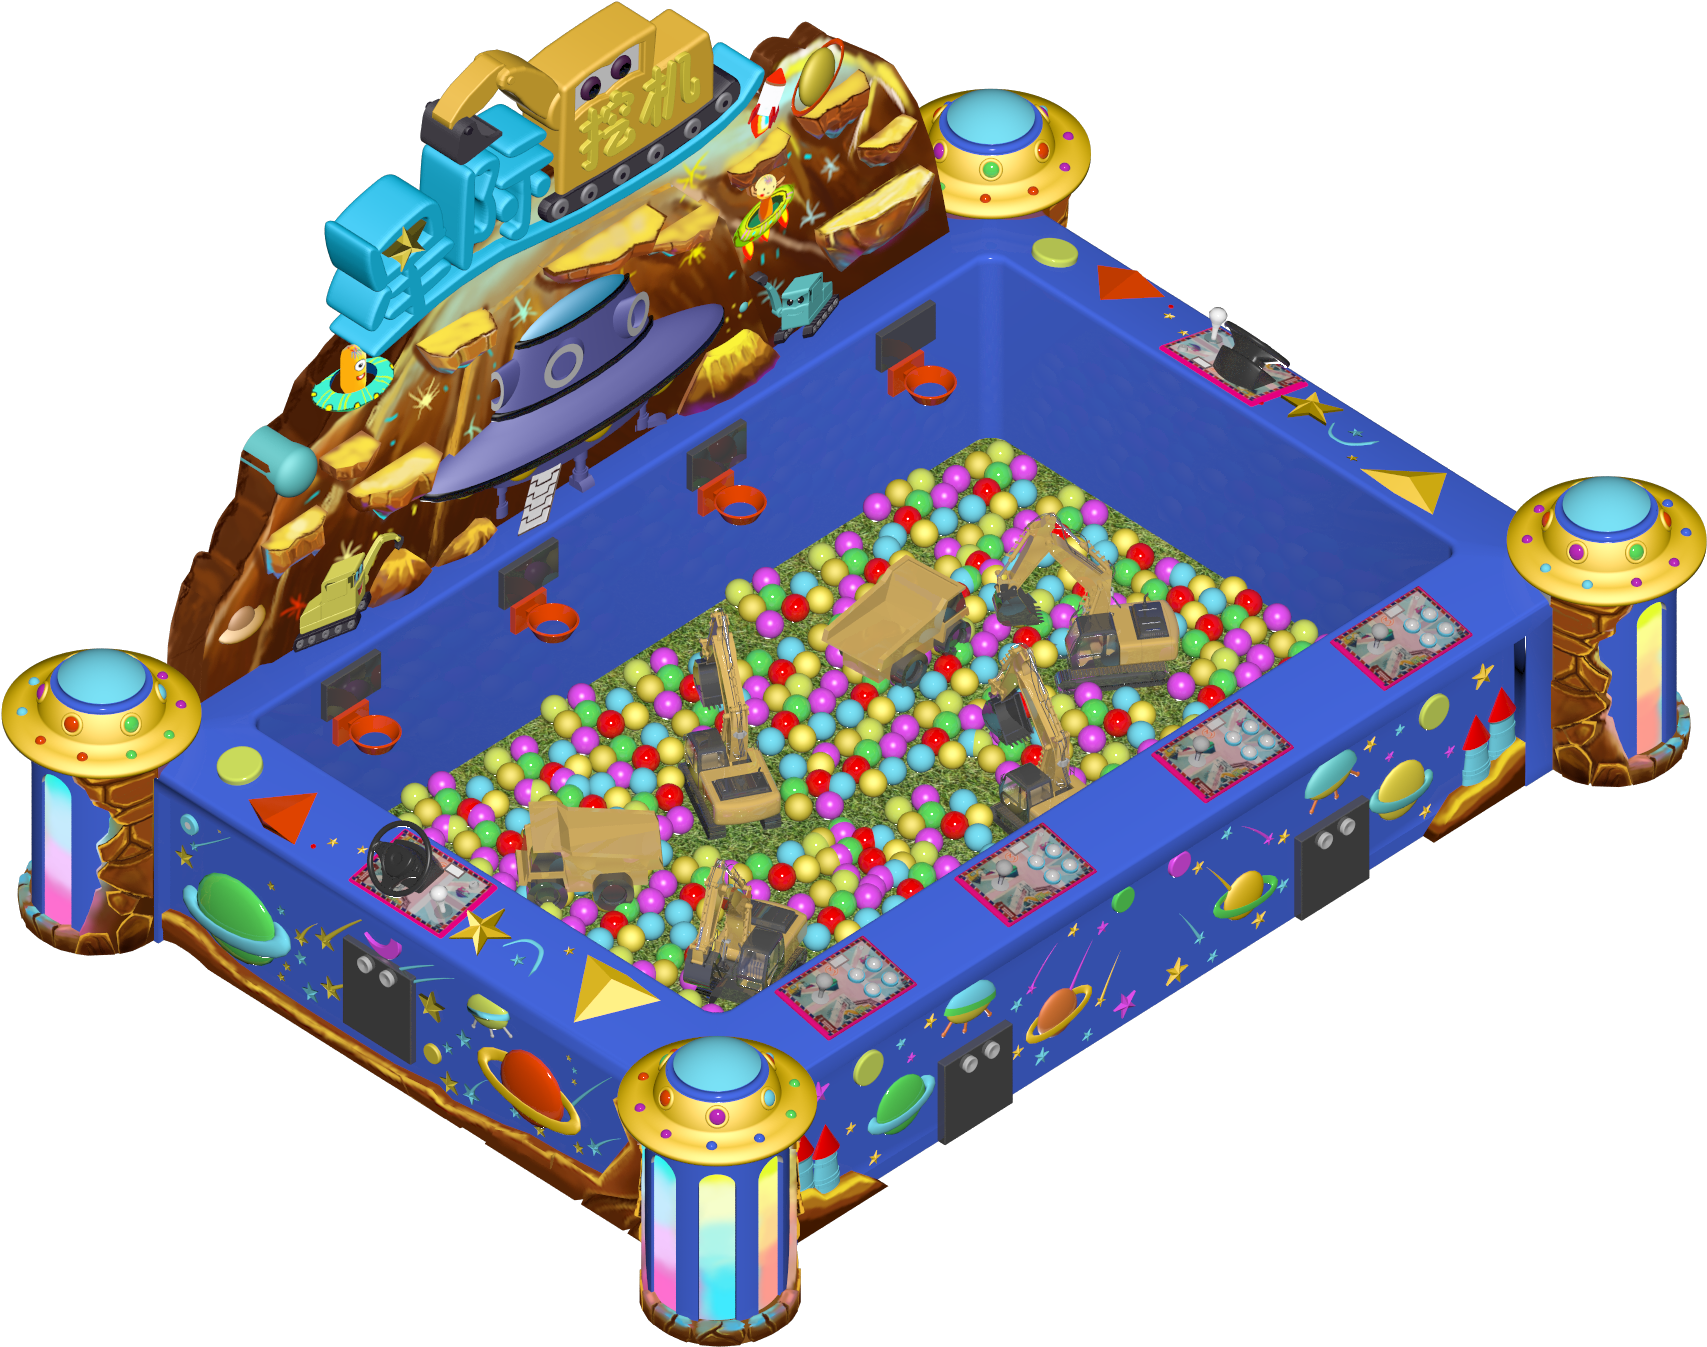 Kids Excavator Game Machine 4 Players Remote Control - Illustration (2000x1500)